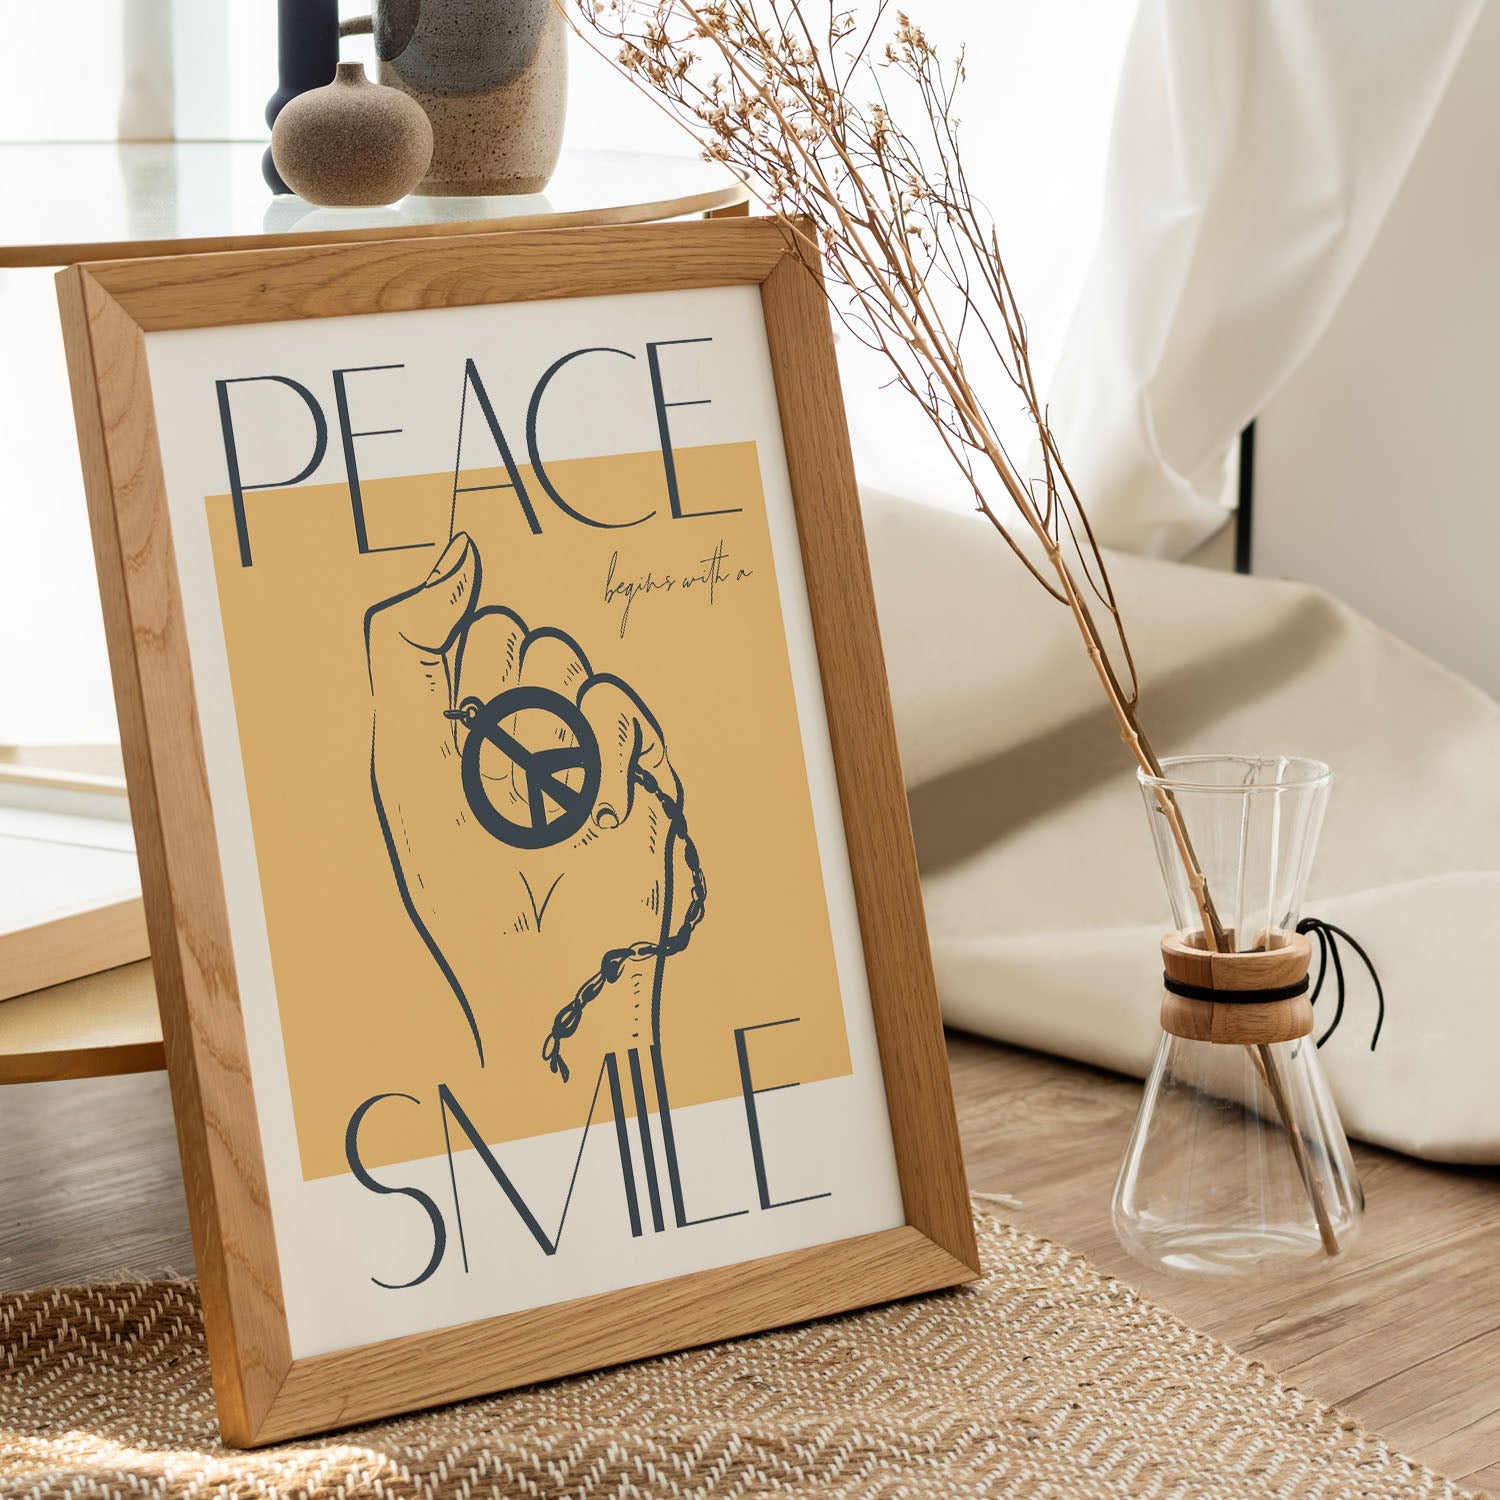 Grab peace-Artwork-Nacnic-Nacnic Estudio SL